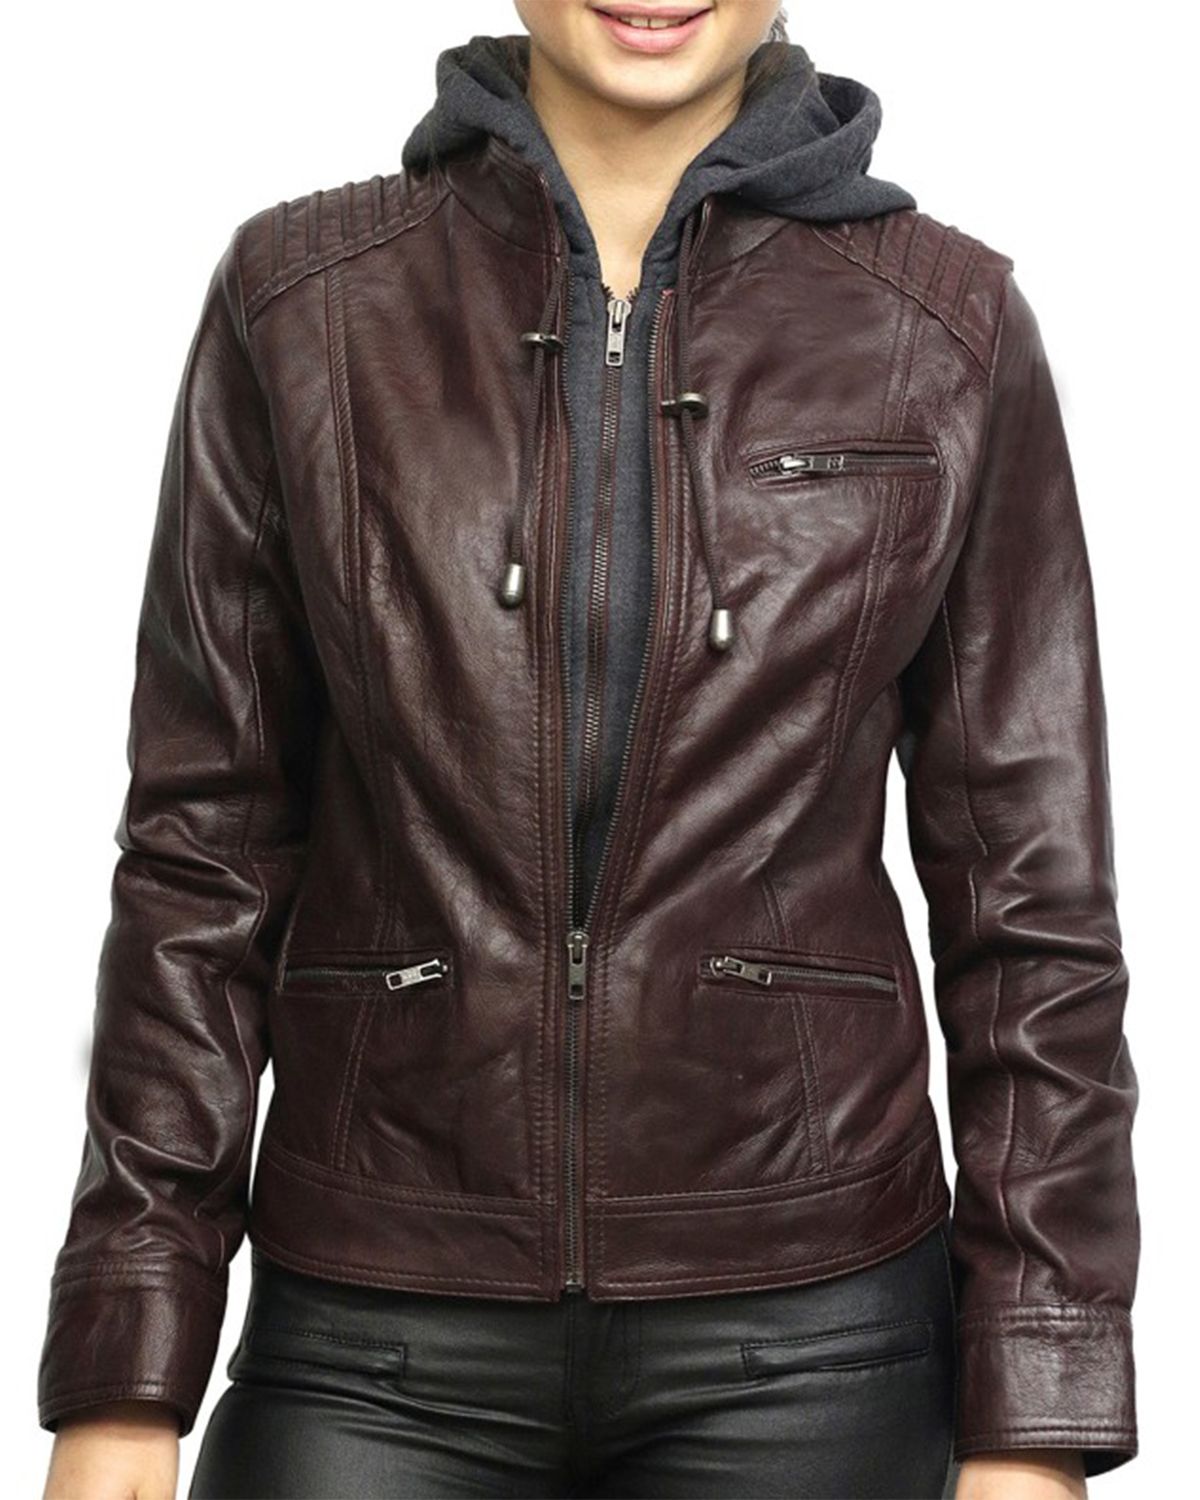 Stylish Men's Premium Quality Blue Real Leather Slim Biker Jacket NFS 576